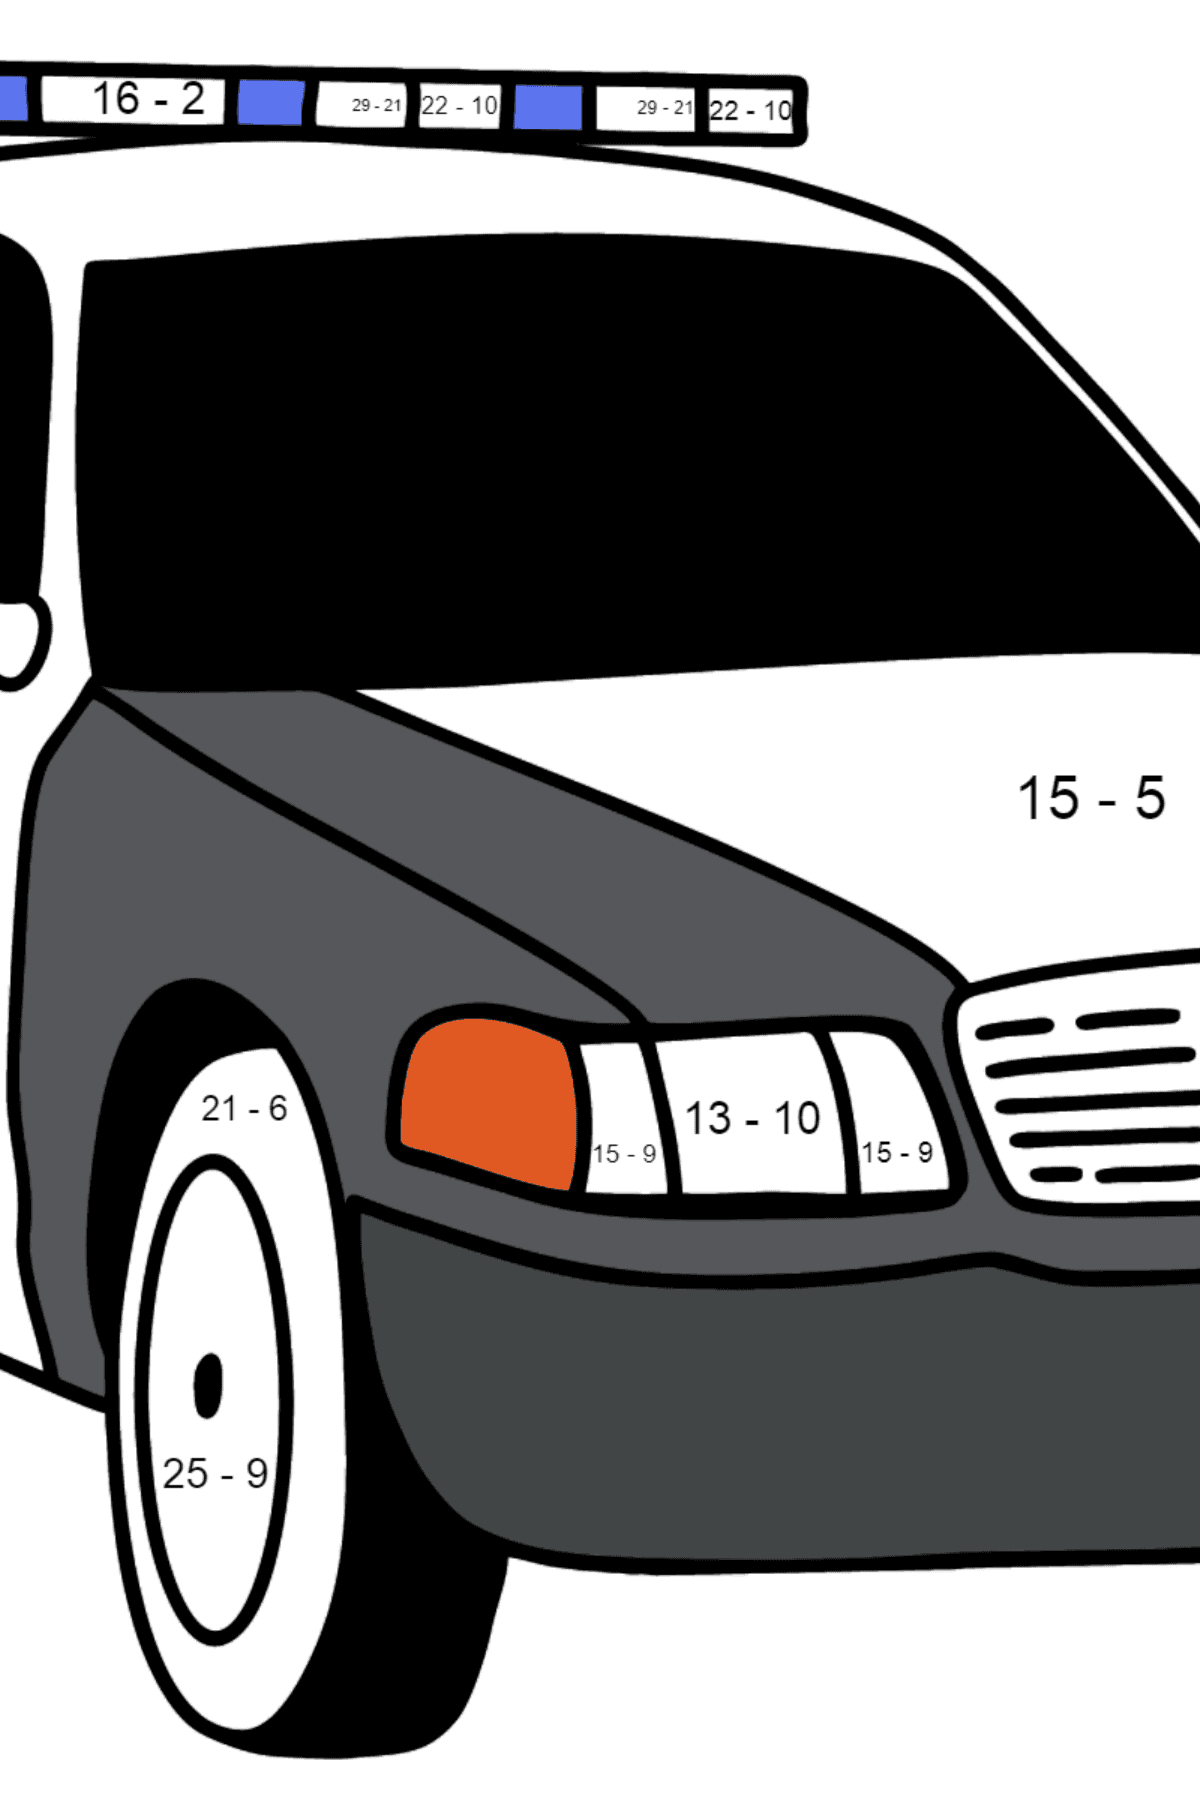 US Police Car Ausmalbild - Mathe Ausmalbilder - Subtraktion für Kinder